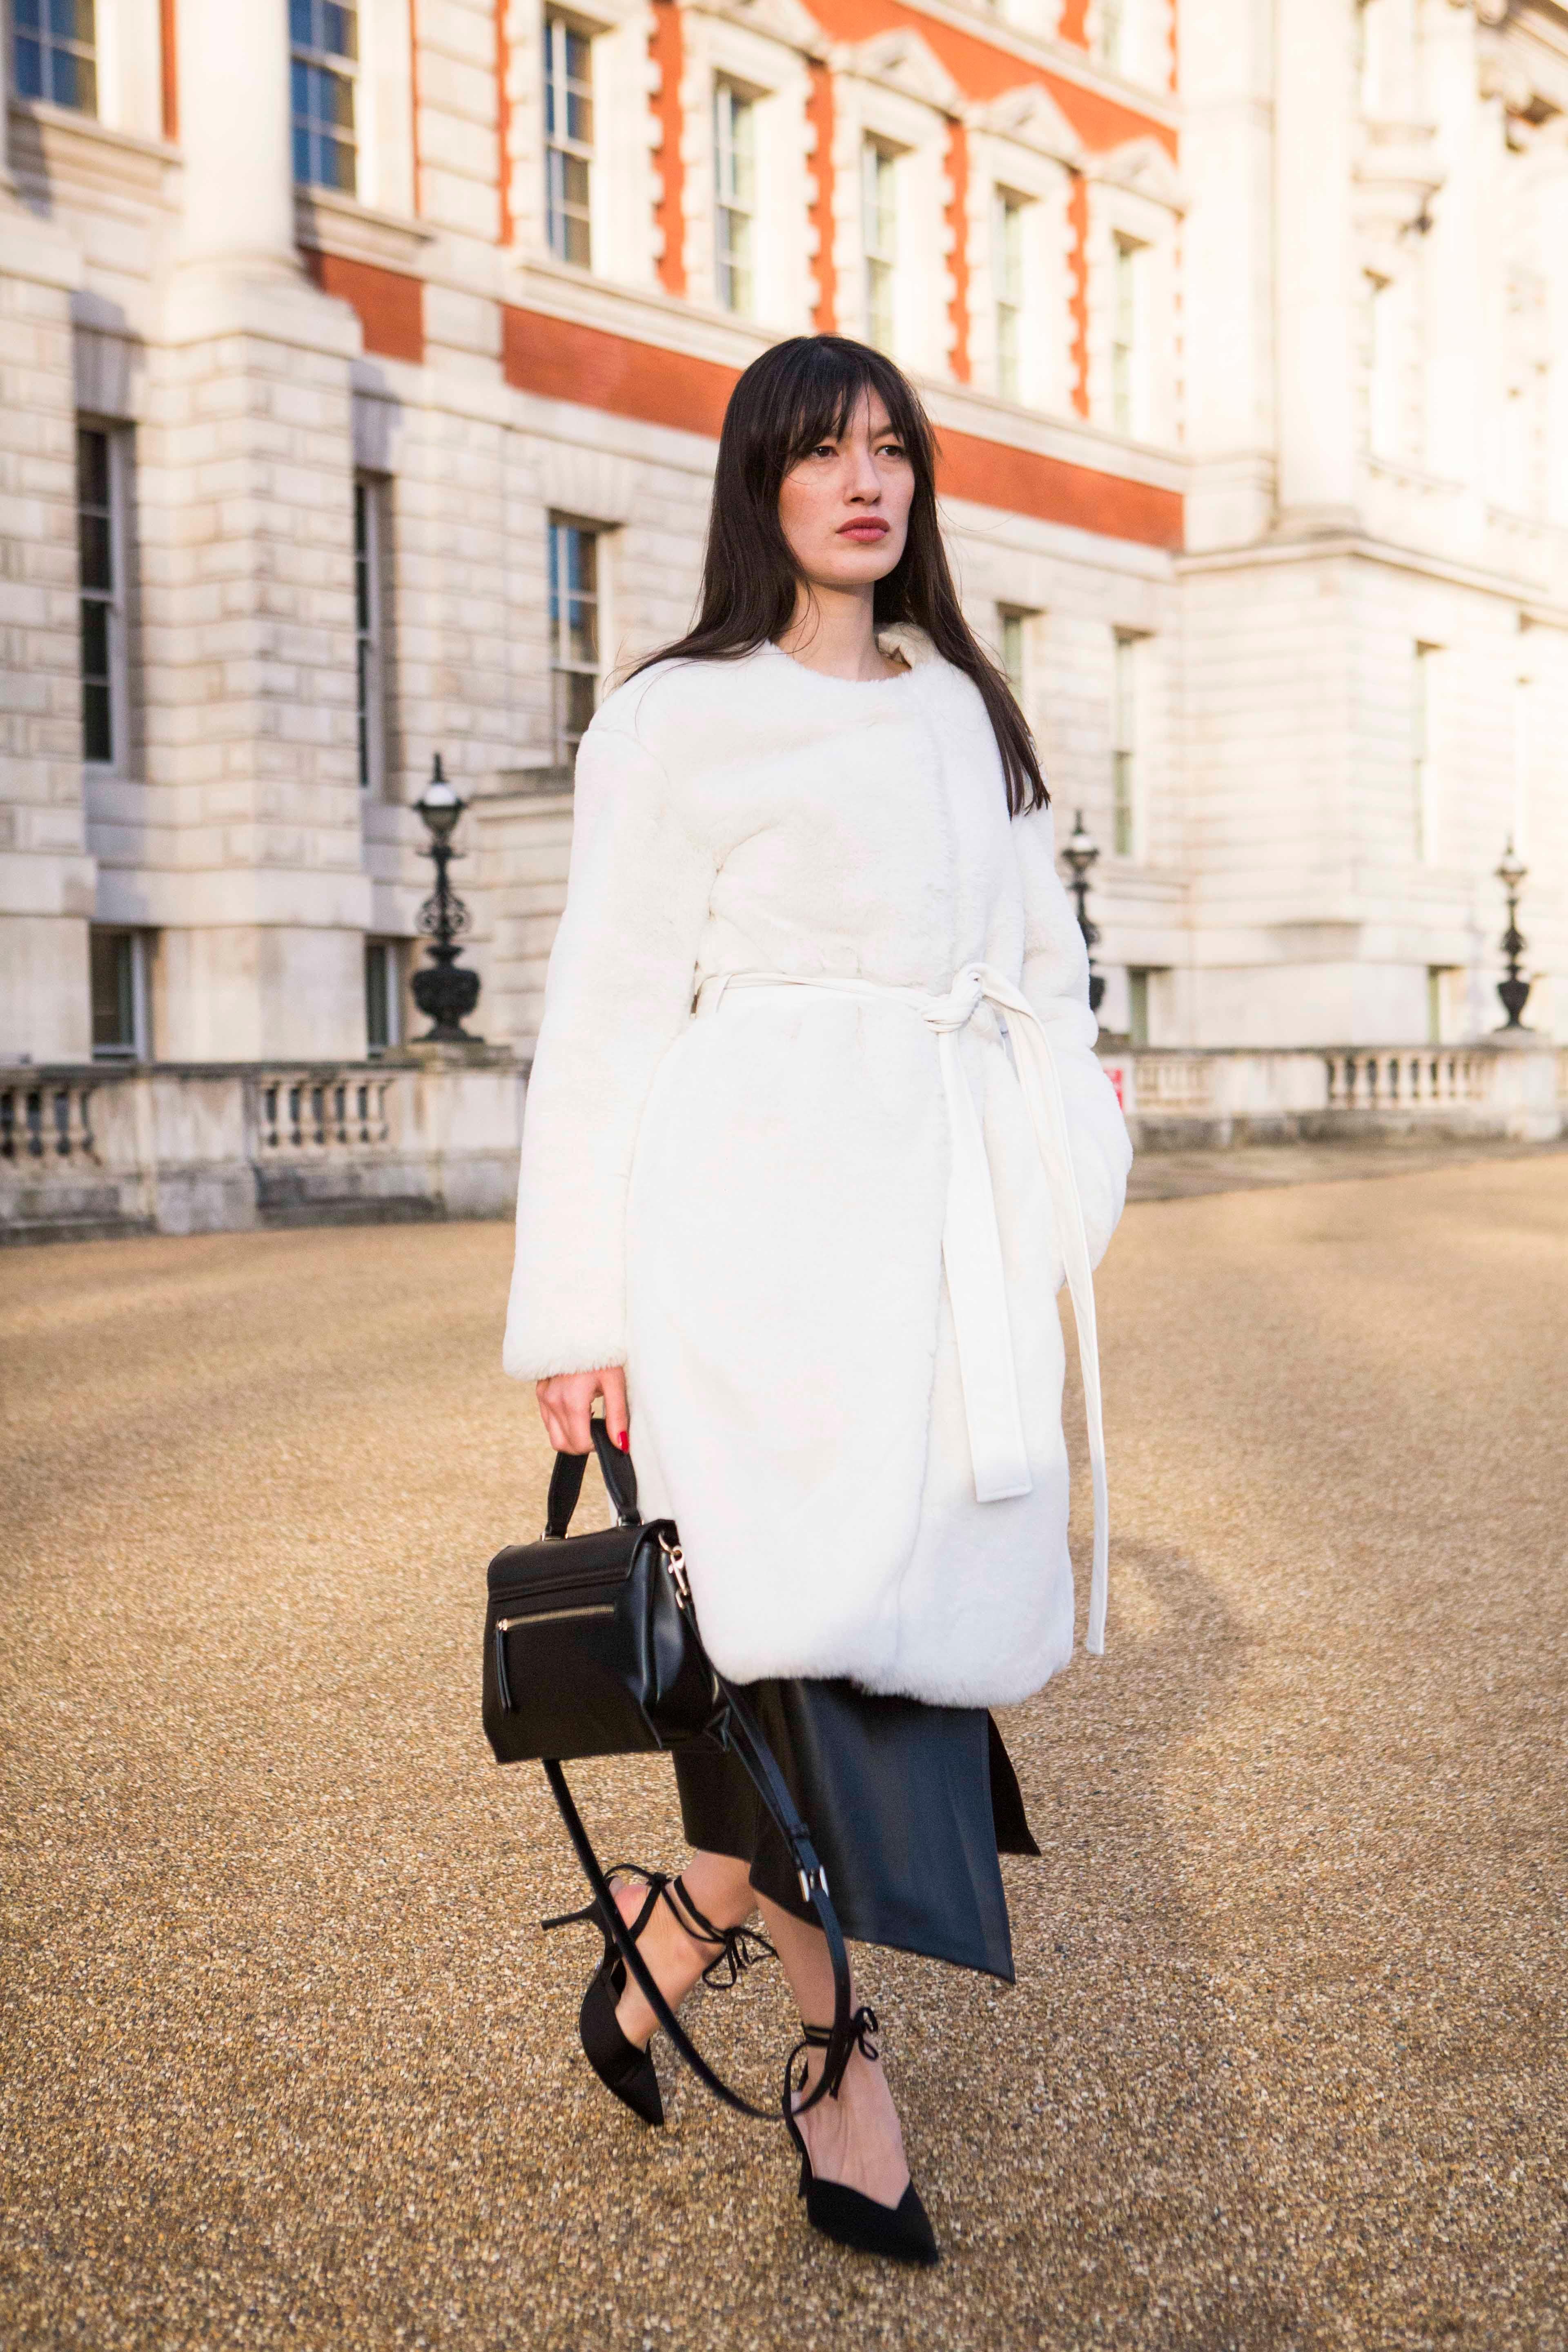 Verheyen London Serena  Collarless Faux Fur Coat in White - Size uk 6 For Sale 2